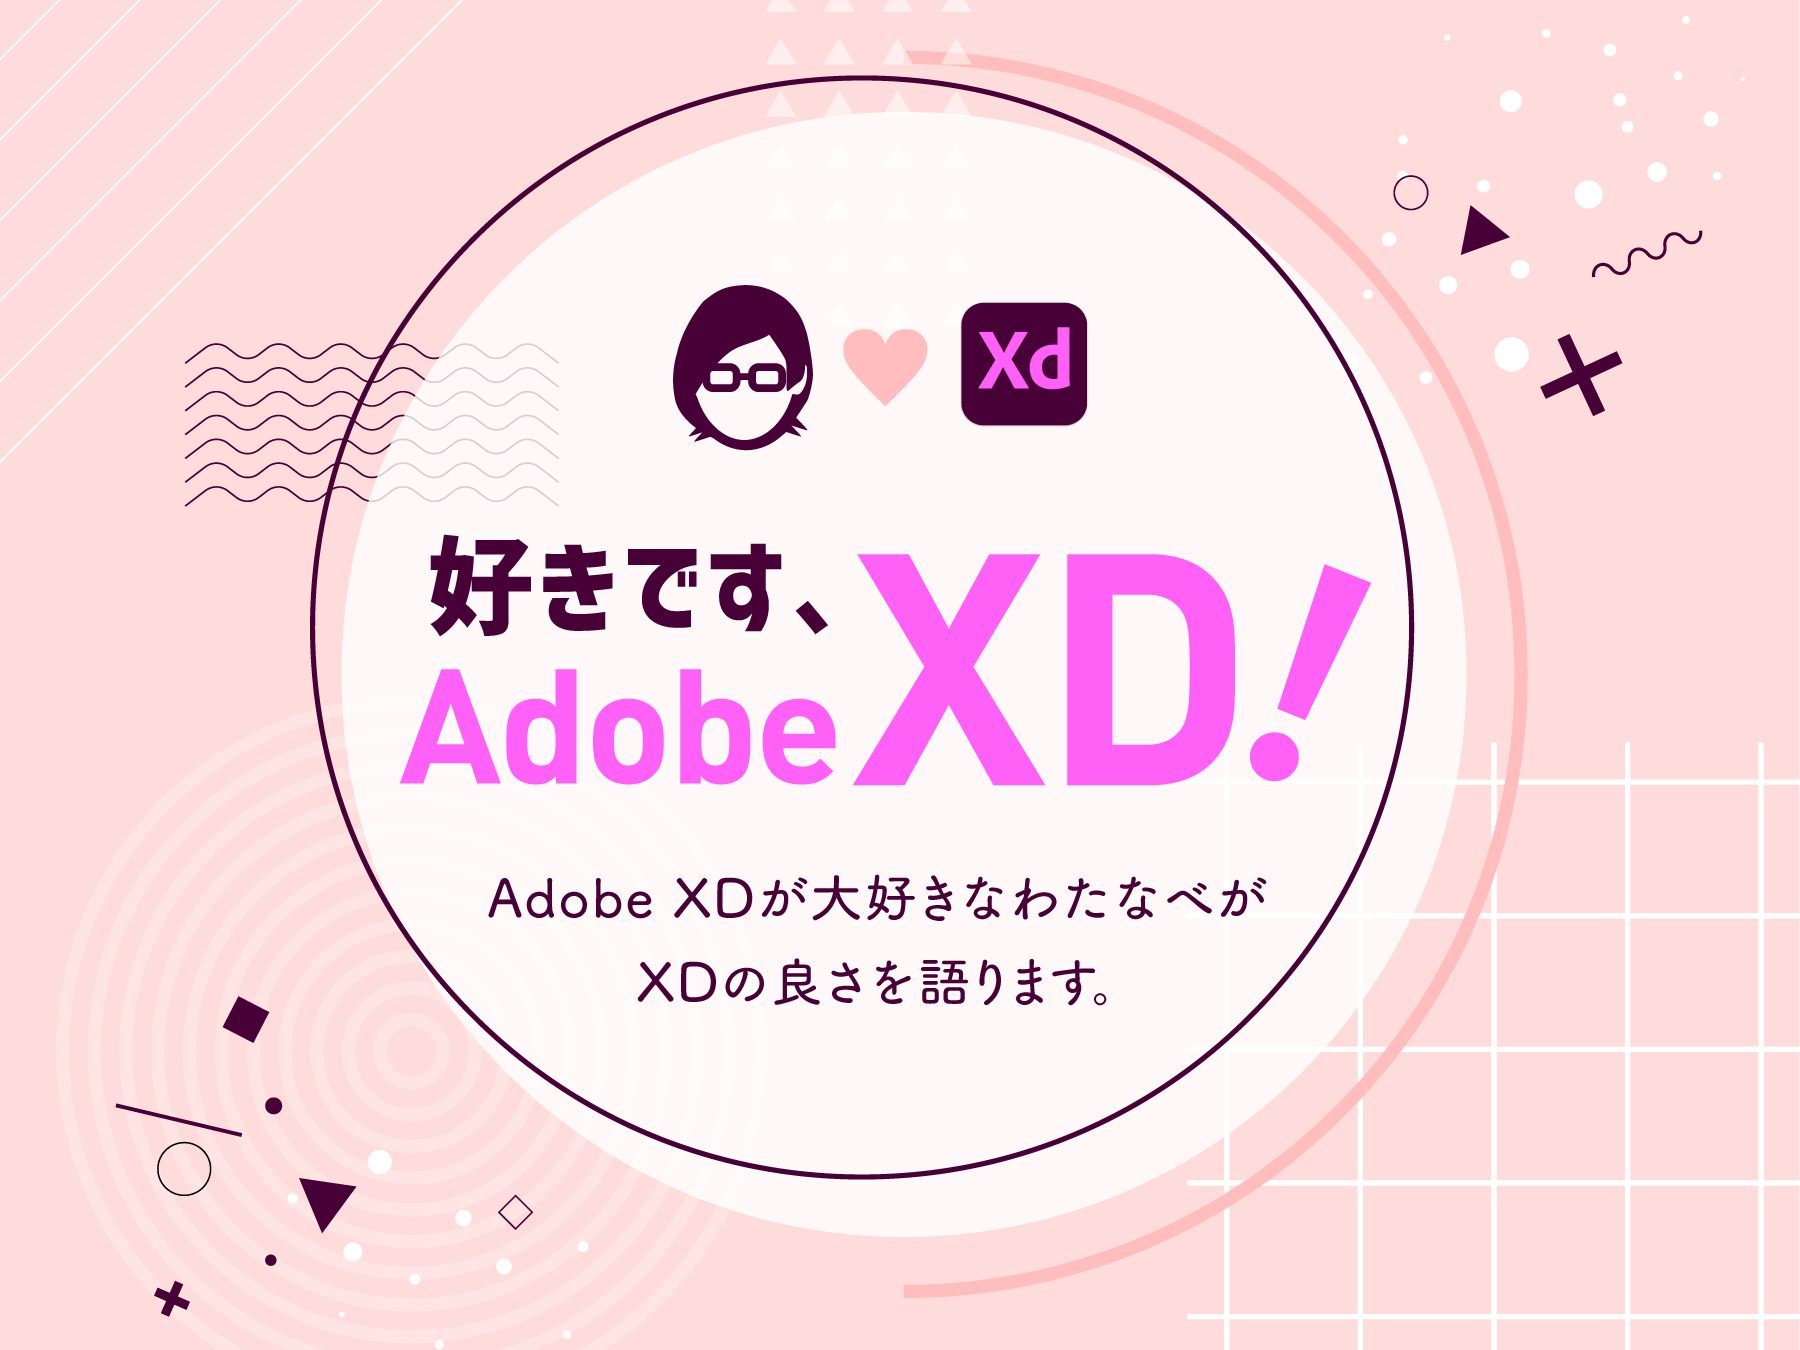 Adobe XDのメリットと優れた機能